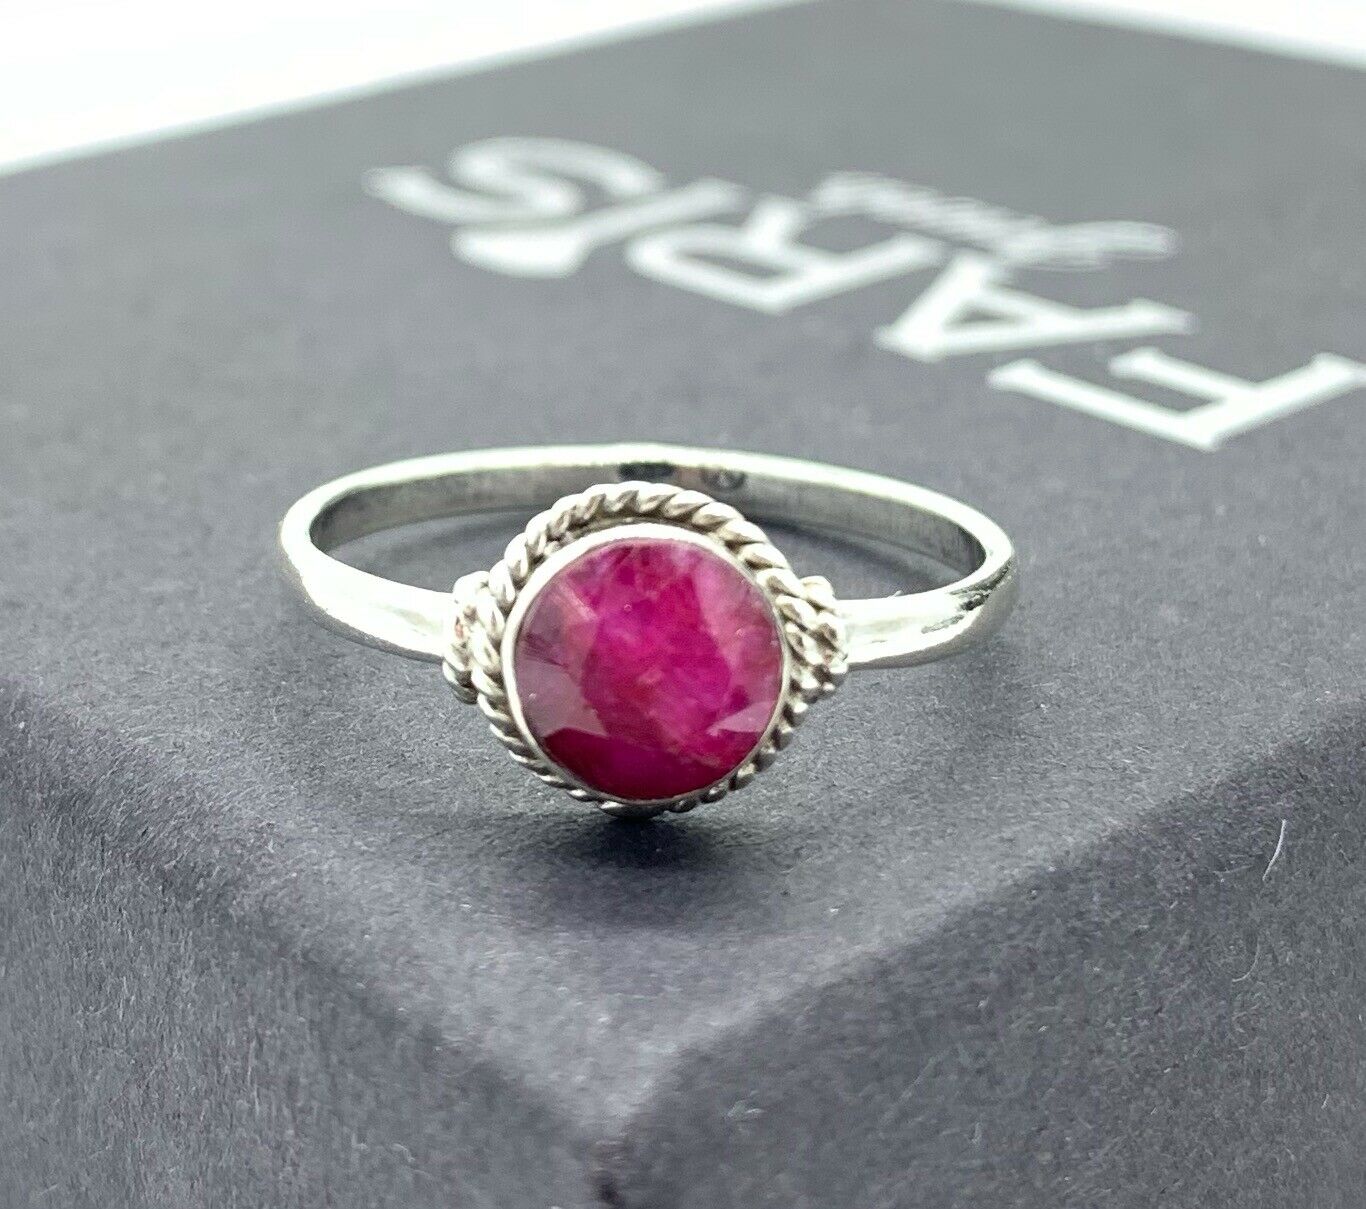 Designer 925 Sterling Silver Ladies Ruby Emerald Amethyst Gemstone Ring Gift Box